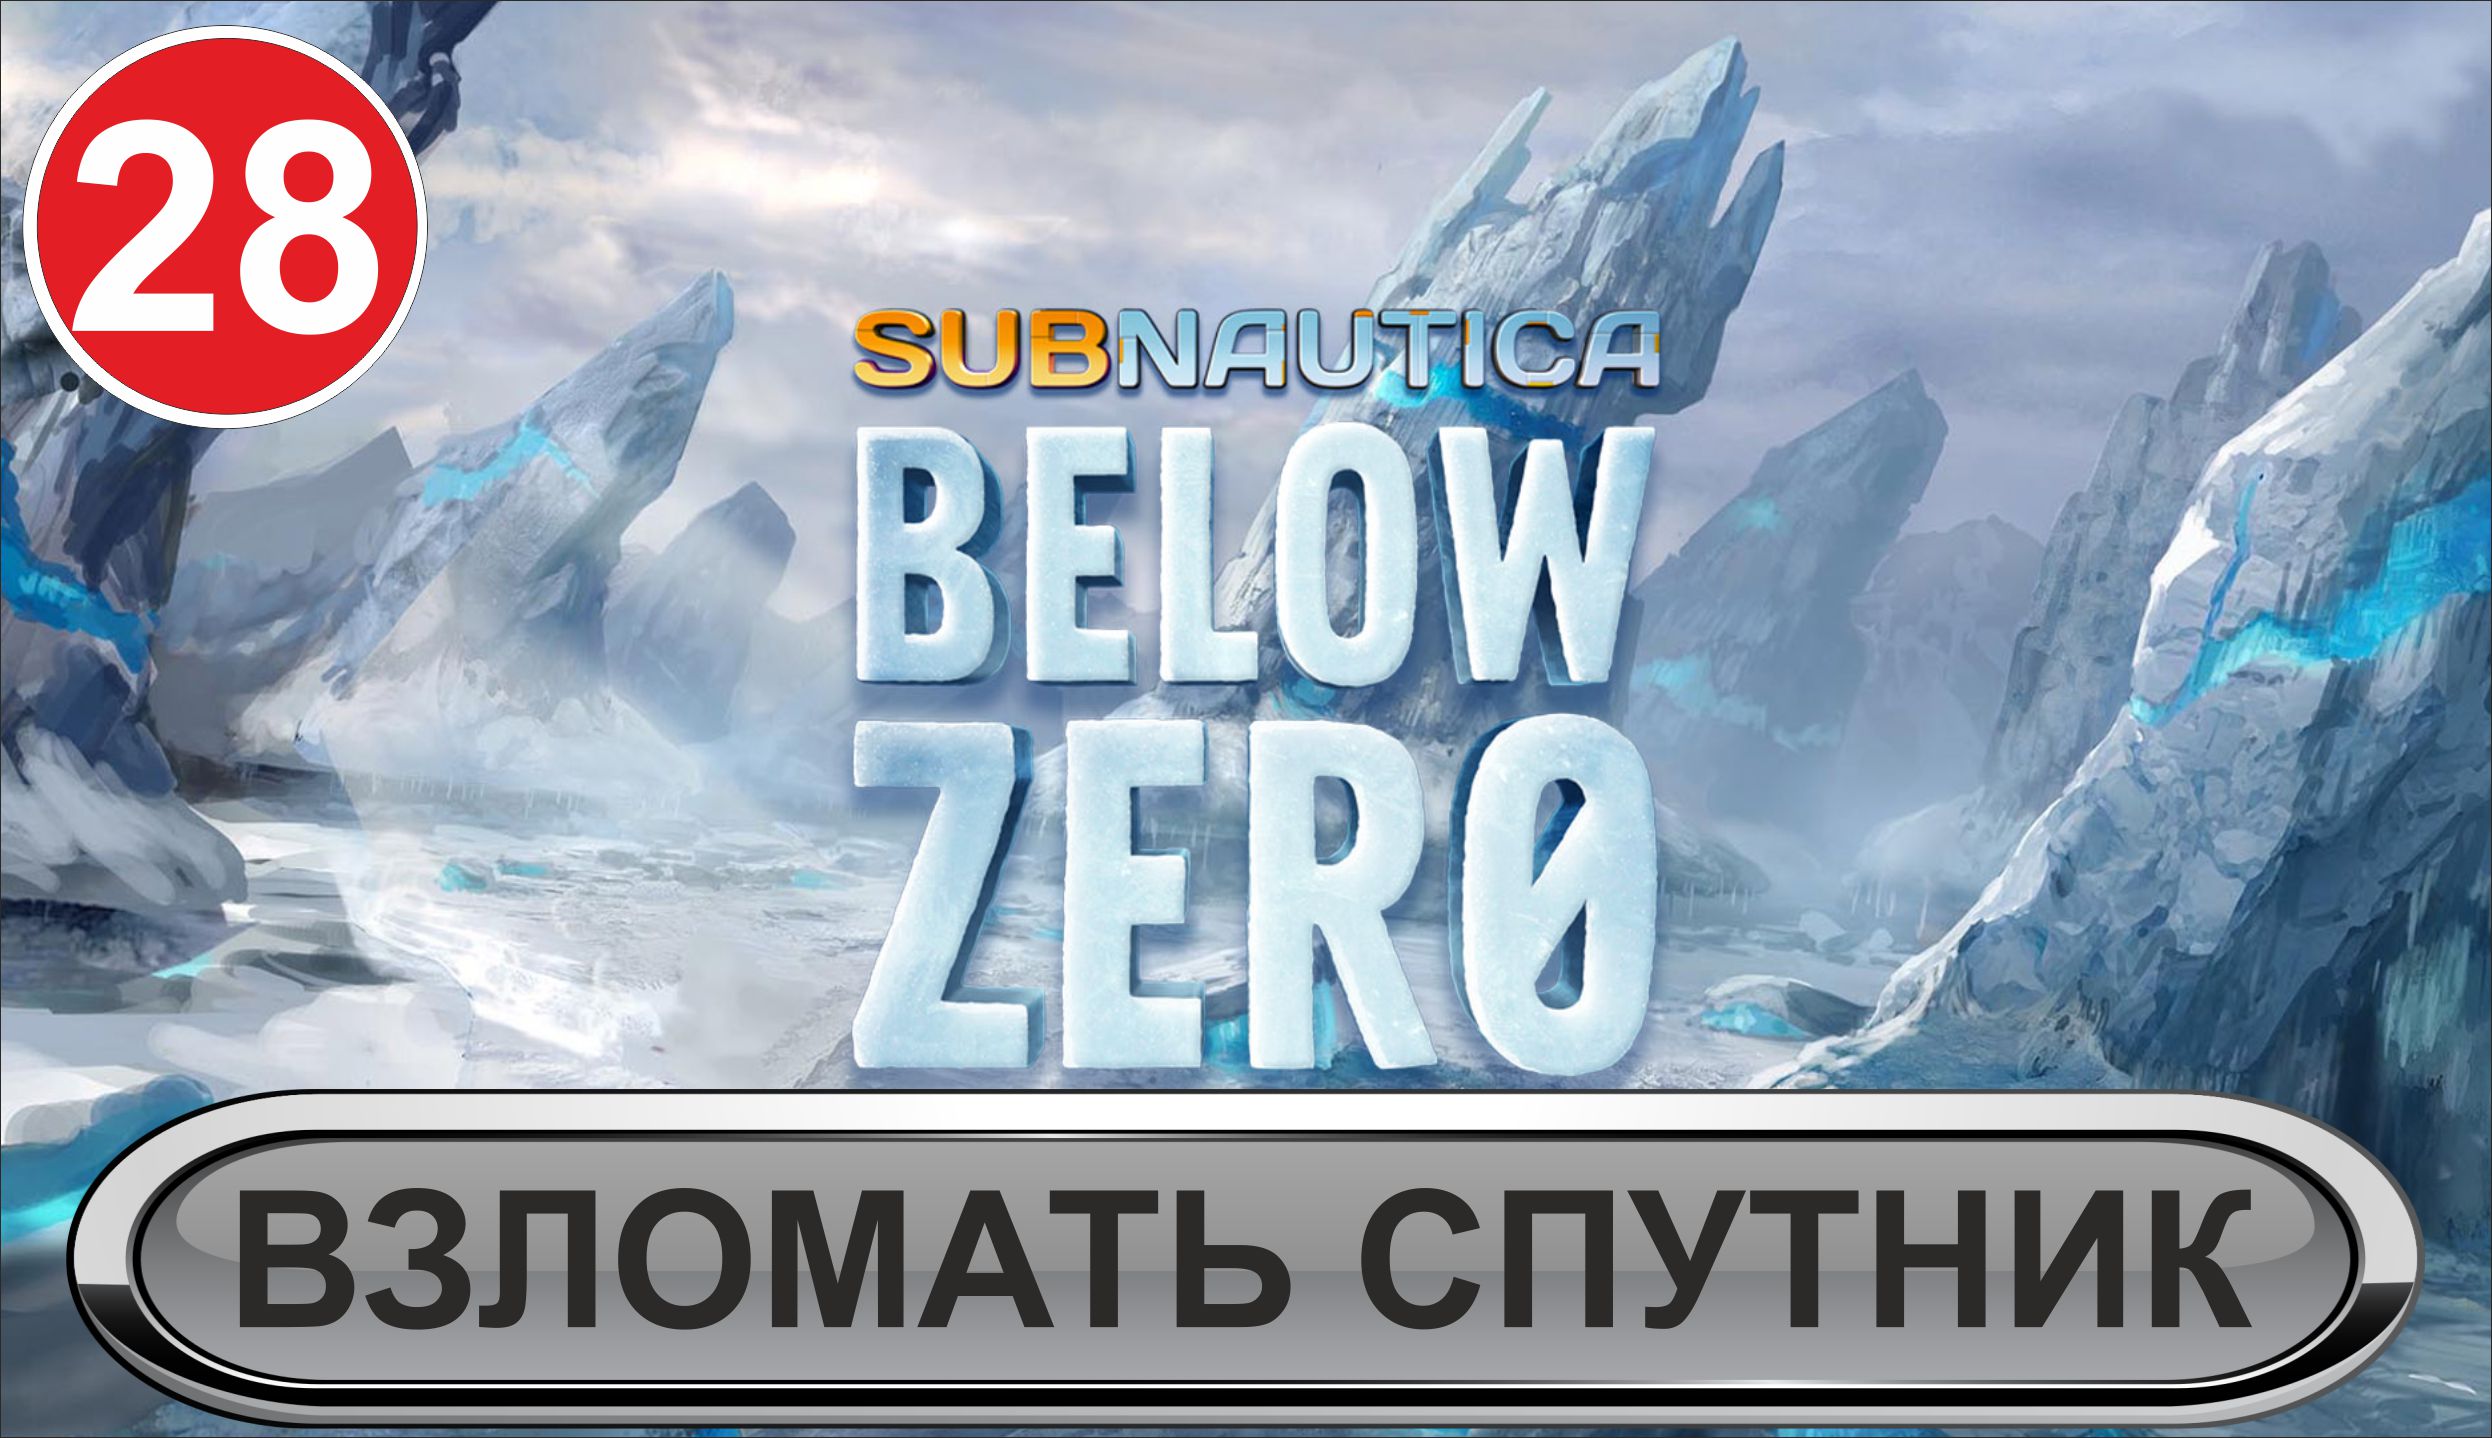 Subnautica: Below Zero - Взломать спутник